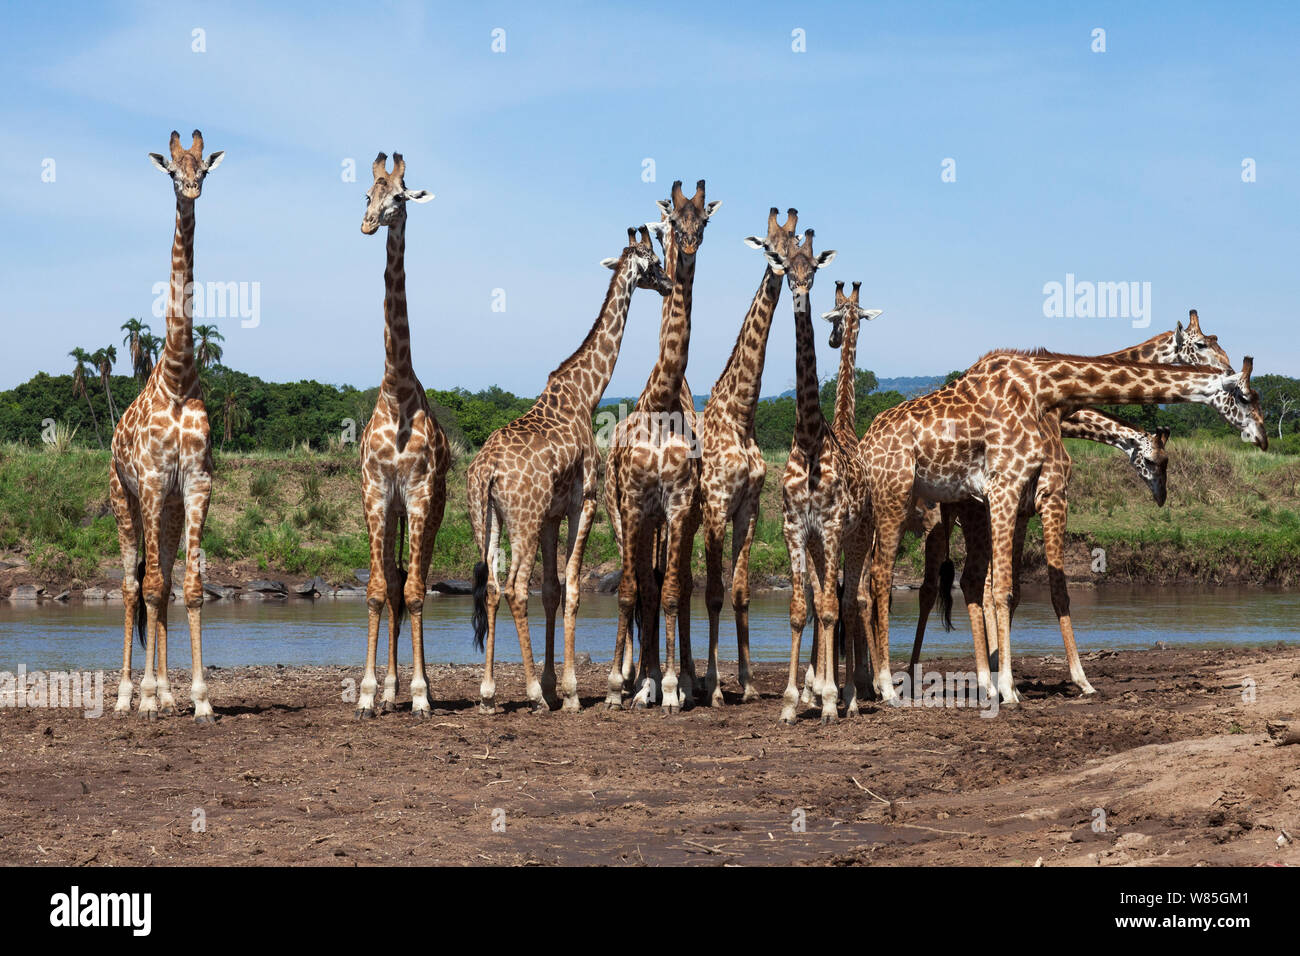 Maasai giraffe (Giraffa camelopardalis tippelskirchi) herd gathered at the edge of the Mara River. Maasai Mara National Reserve, Kenya. Stock Photo